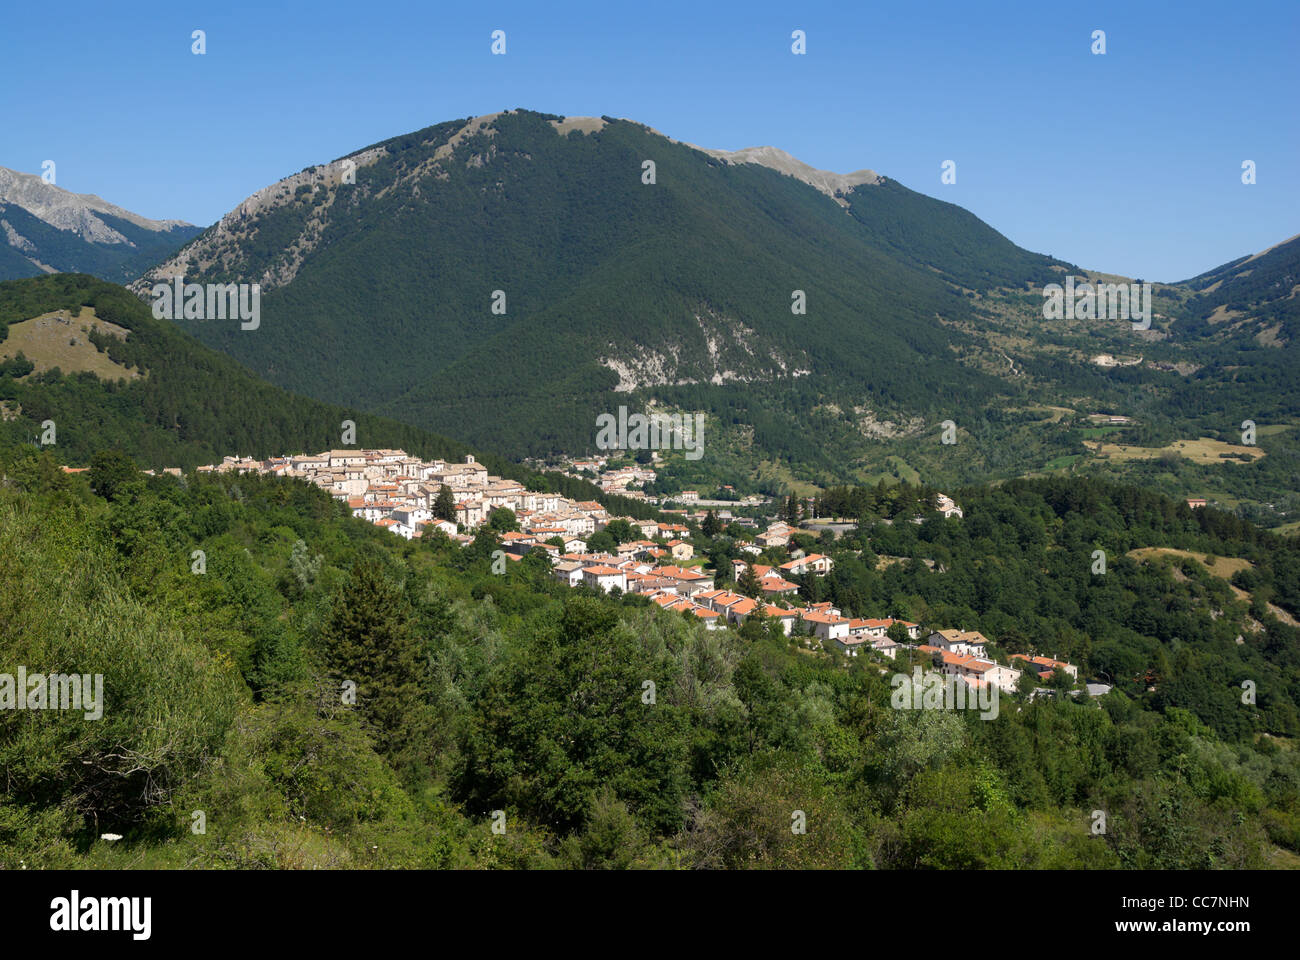 View of Civitella Alfedena and Villetta Barrea mountain villages, Italy Stock Photo